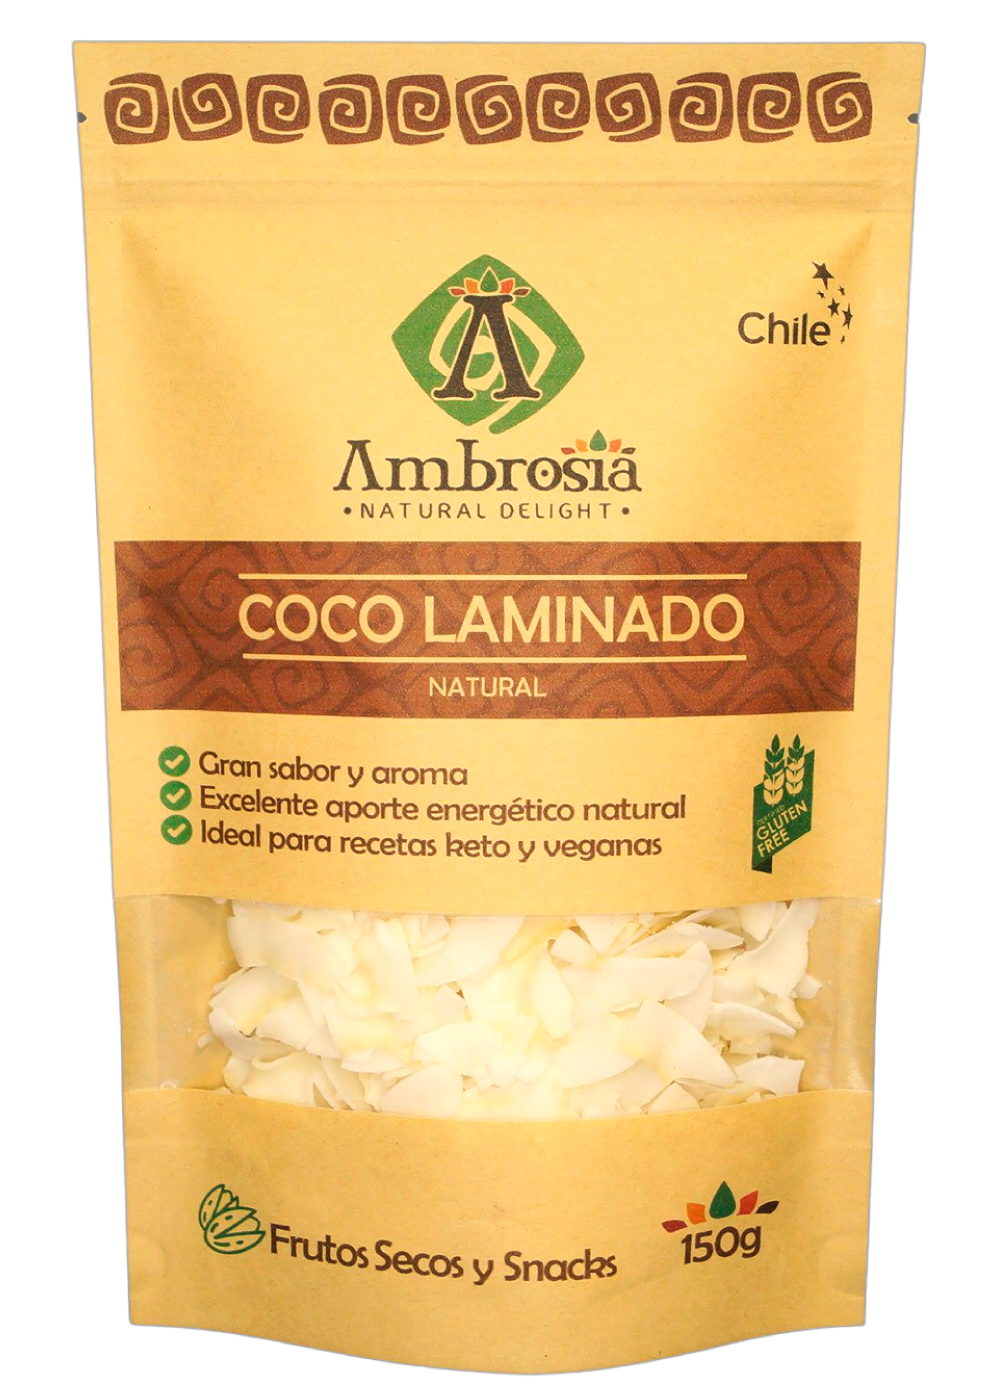 Coco Laminado – Natural